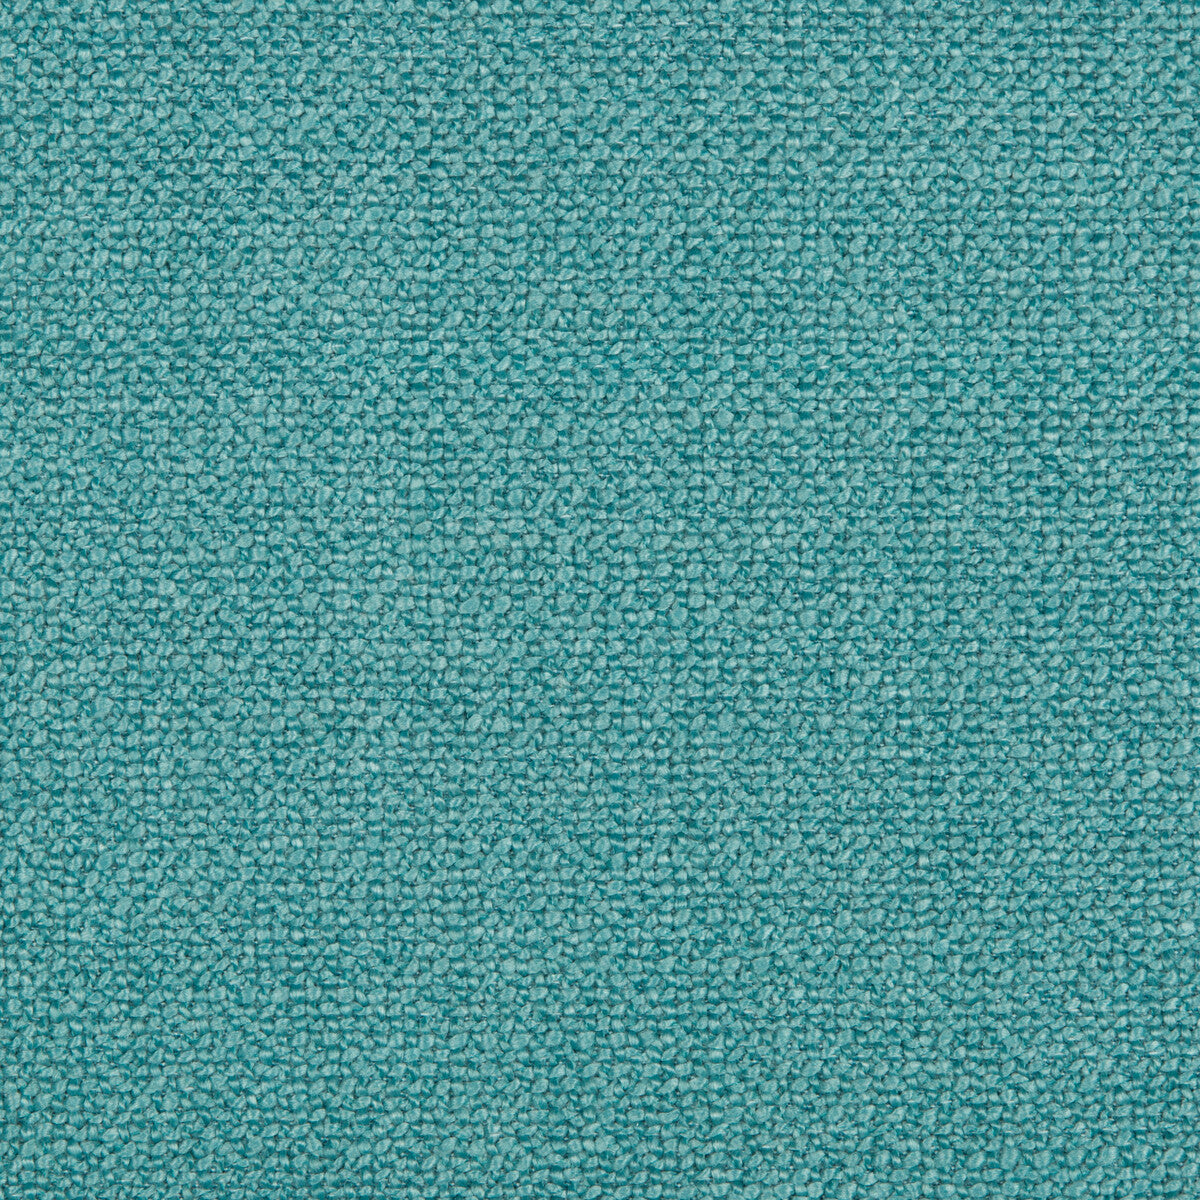 Kravet Smart fabric in 35379-35 color - pattern 35379.35.0 - by Kravet Smart in the Performance Kravetarmor collection